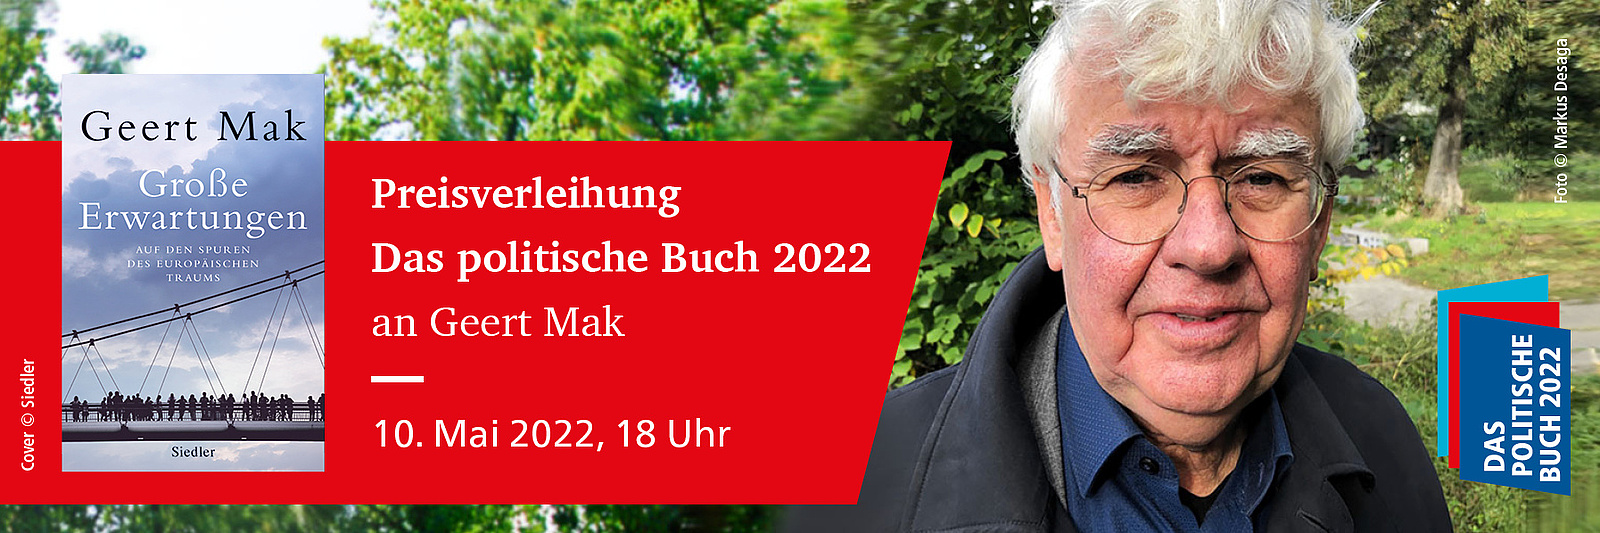 Portrait Geert Maks mit der Ankündigung "Preisverleihung Das politische Buch 2022 an Geert Mak am 10. Mai 2022, 18 Uhr